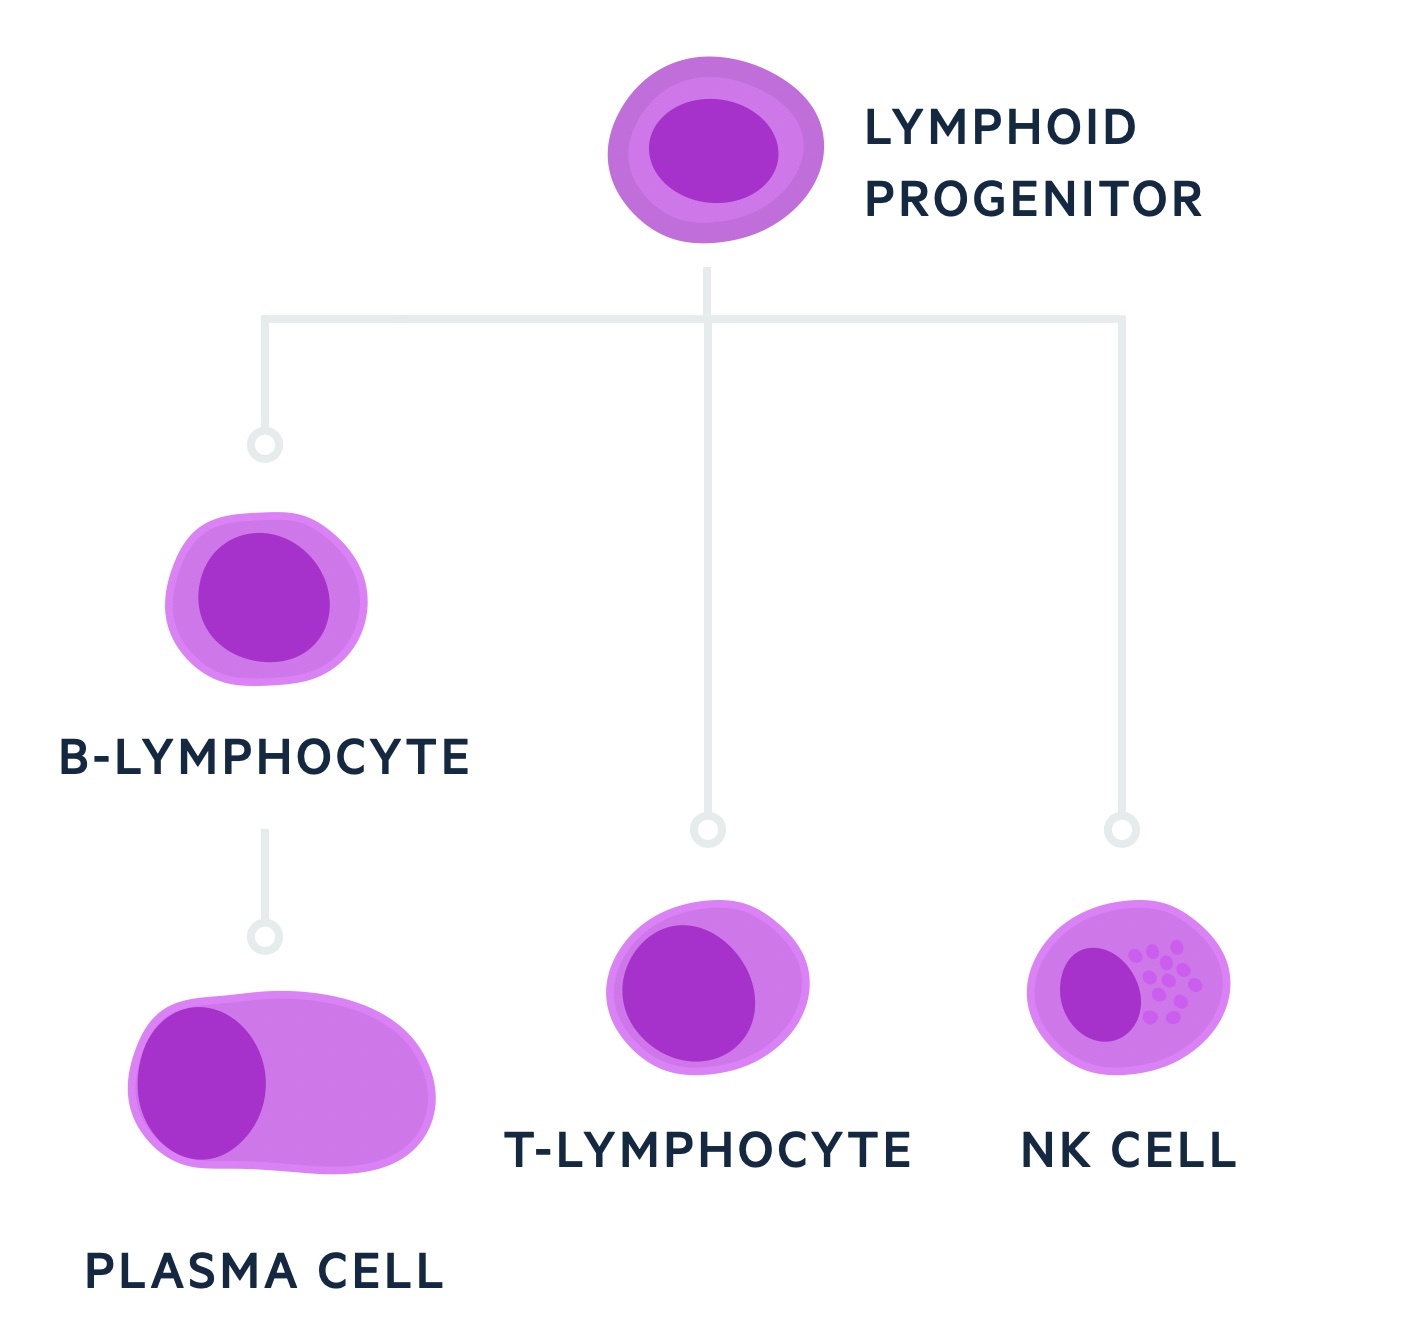 Lymphoid lineage